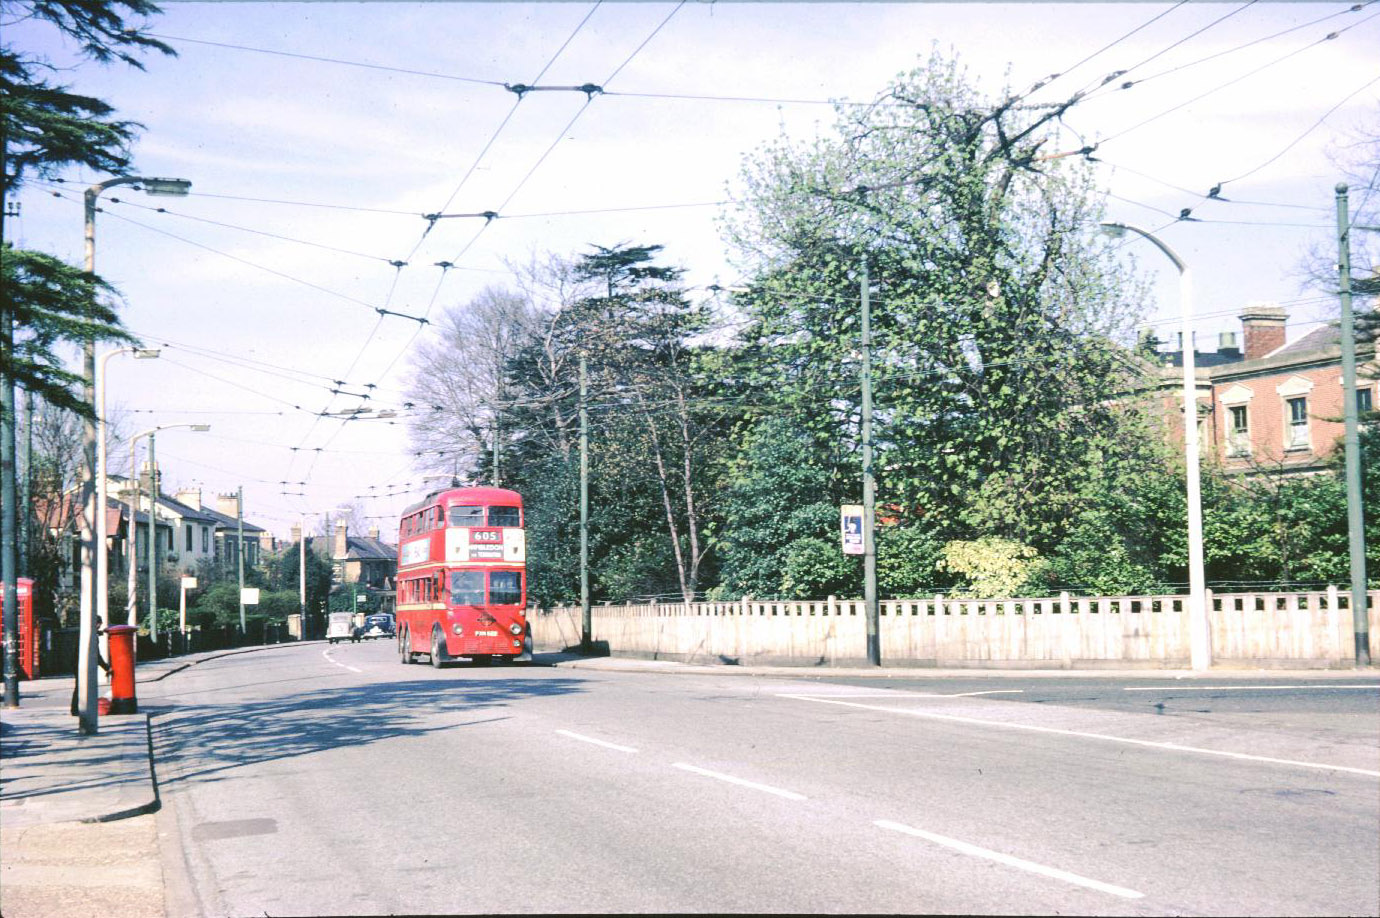 Junction of Stanley Road and Hampton Road